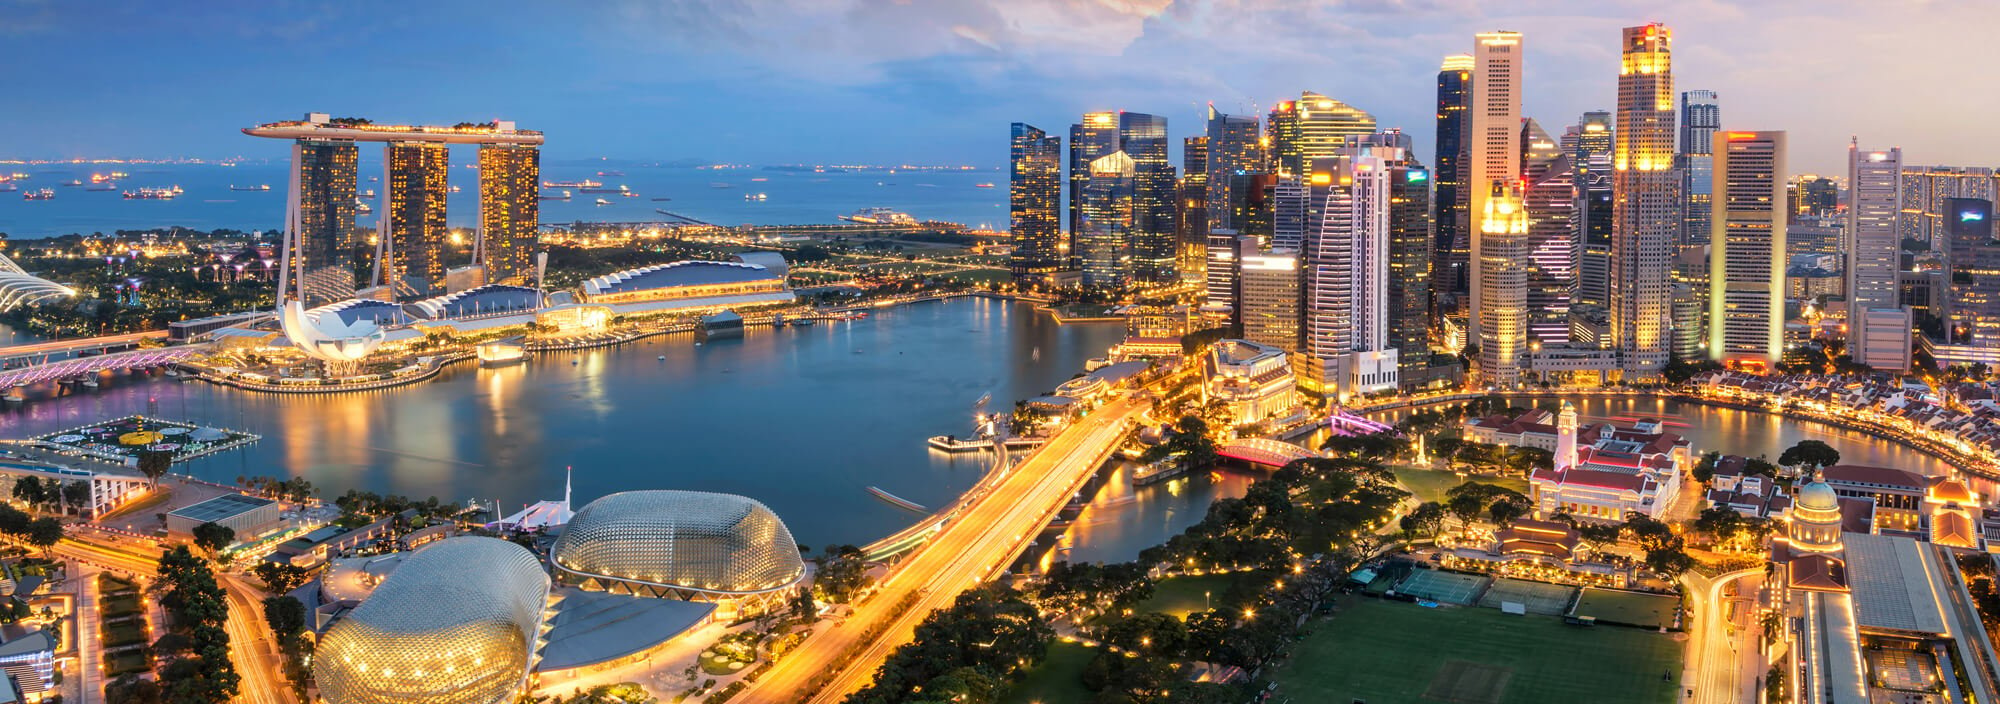 Aerial view of Singapore Skyline at night